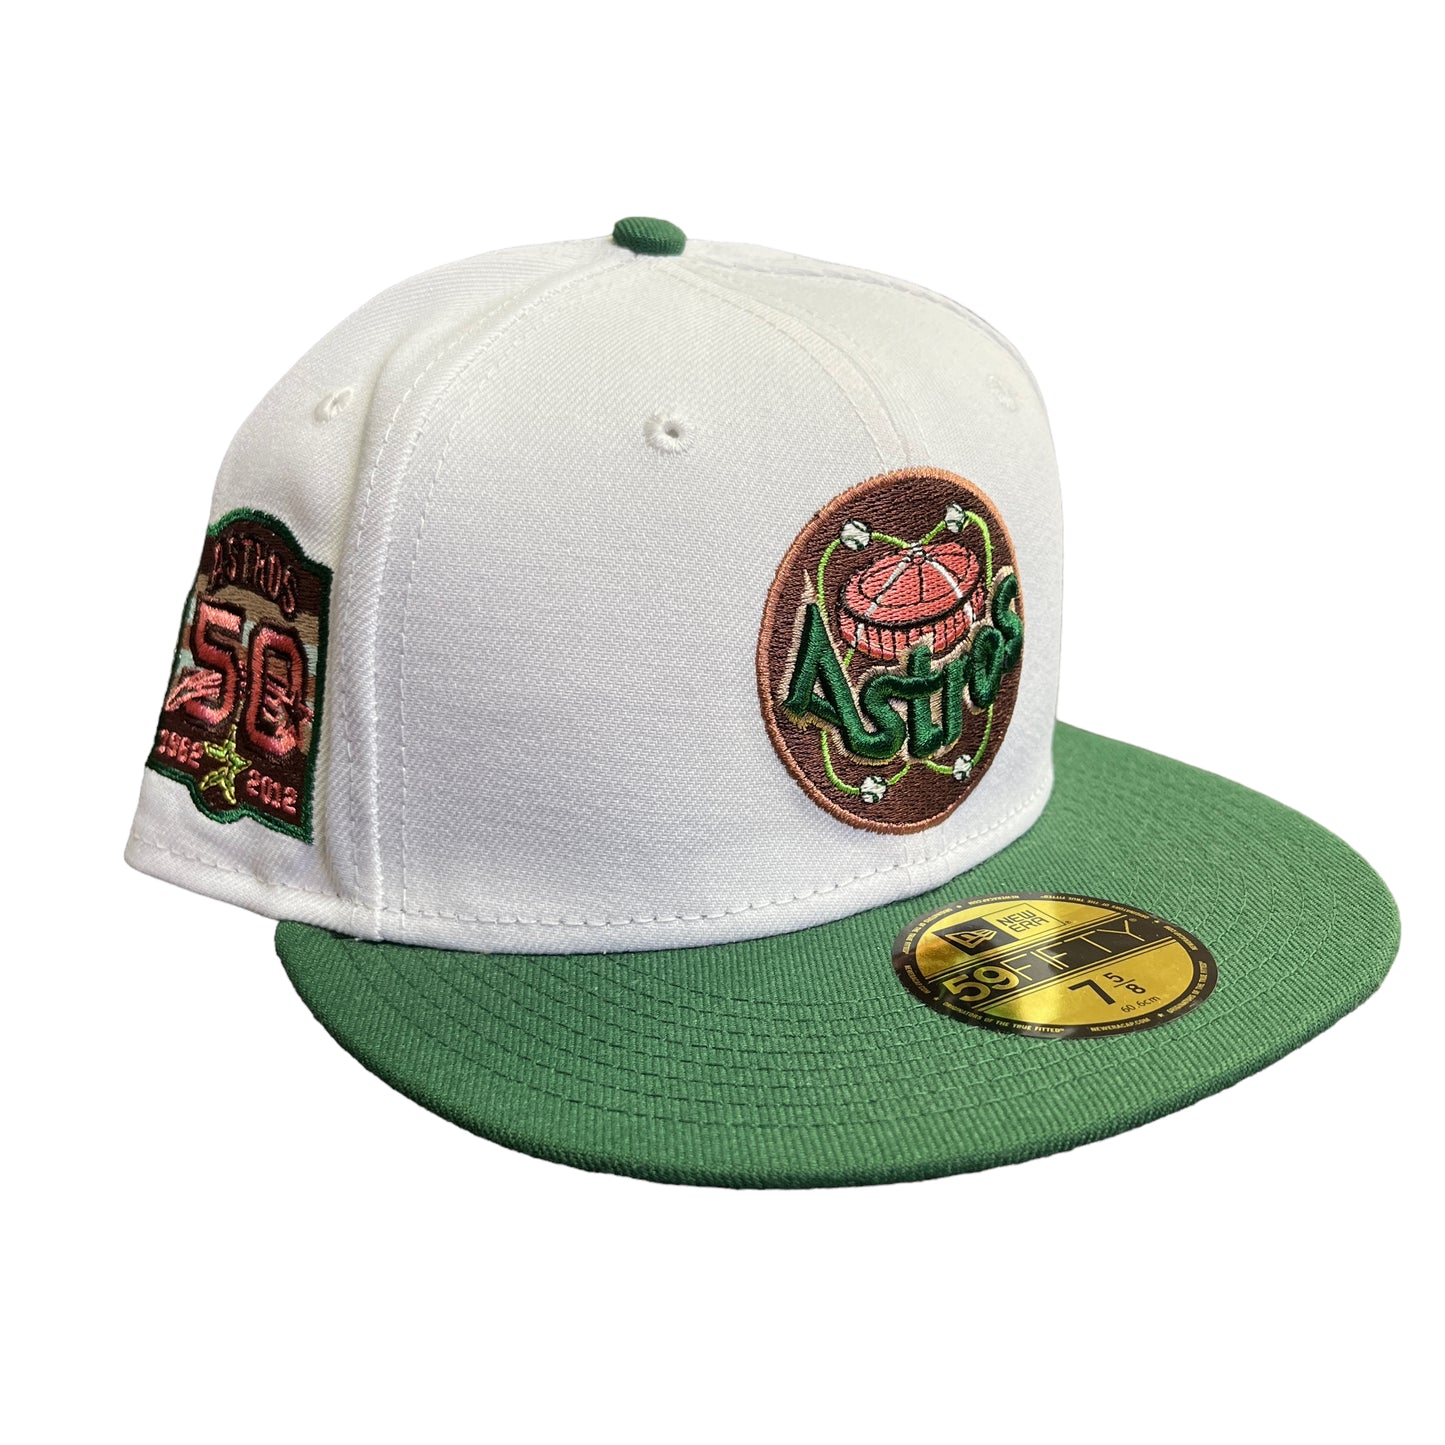 Astros White/Green Hat